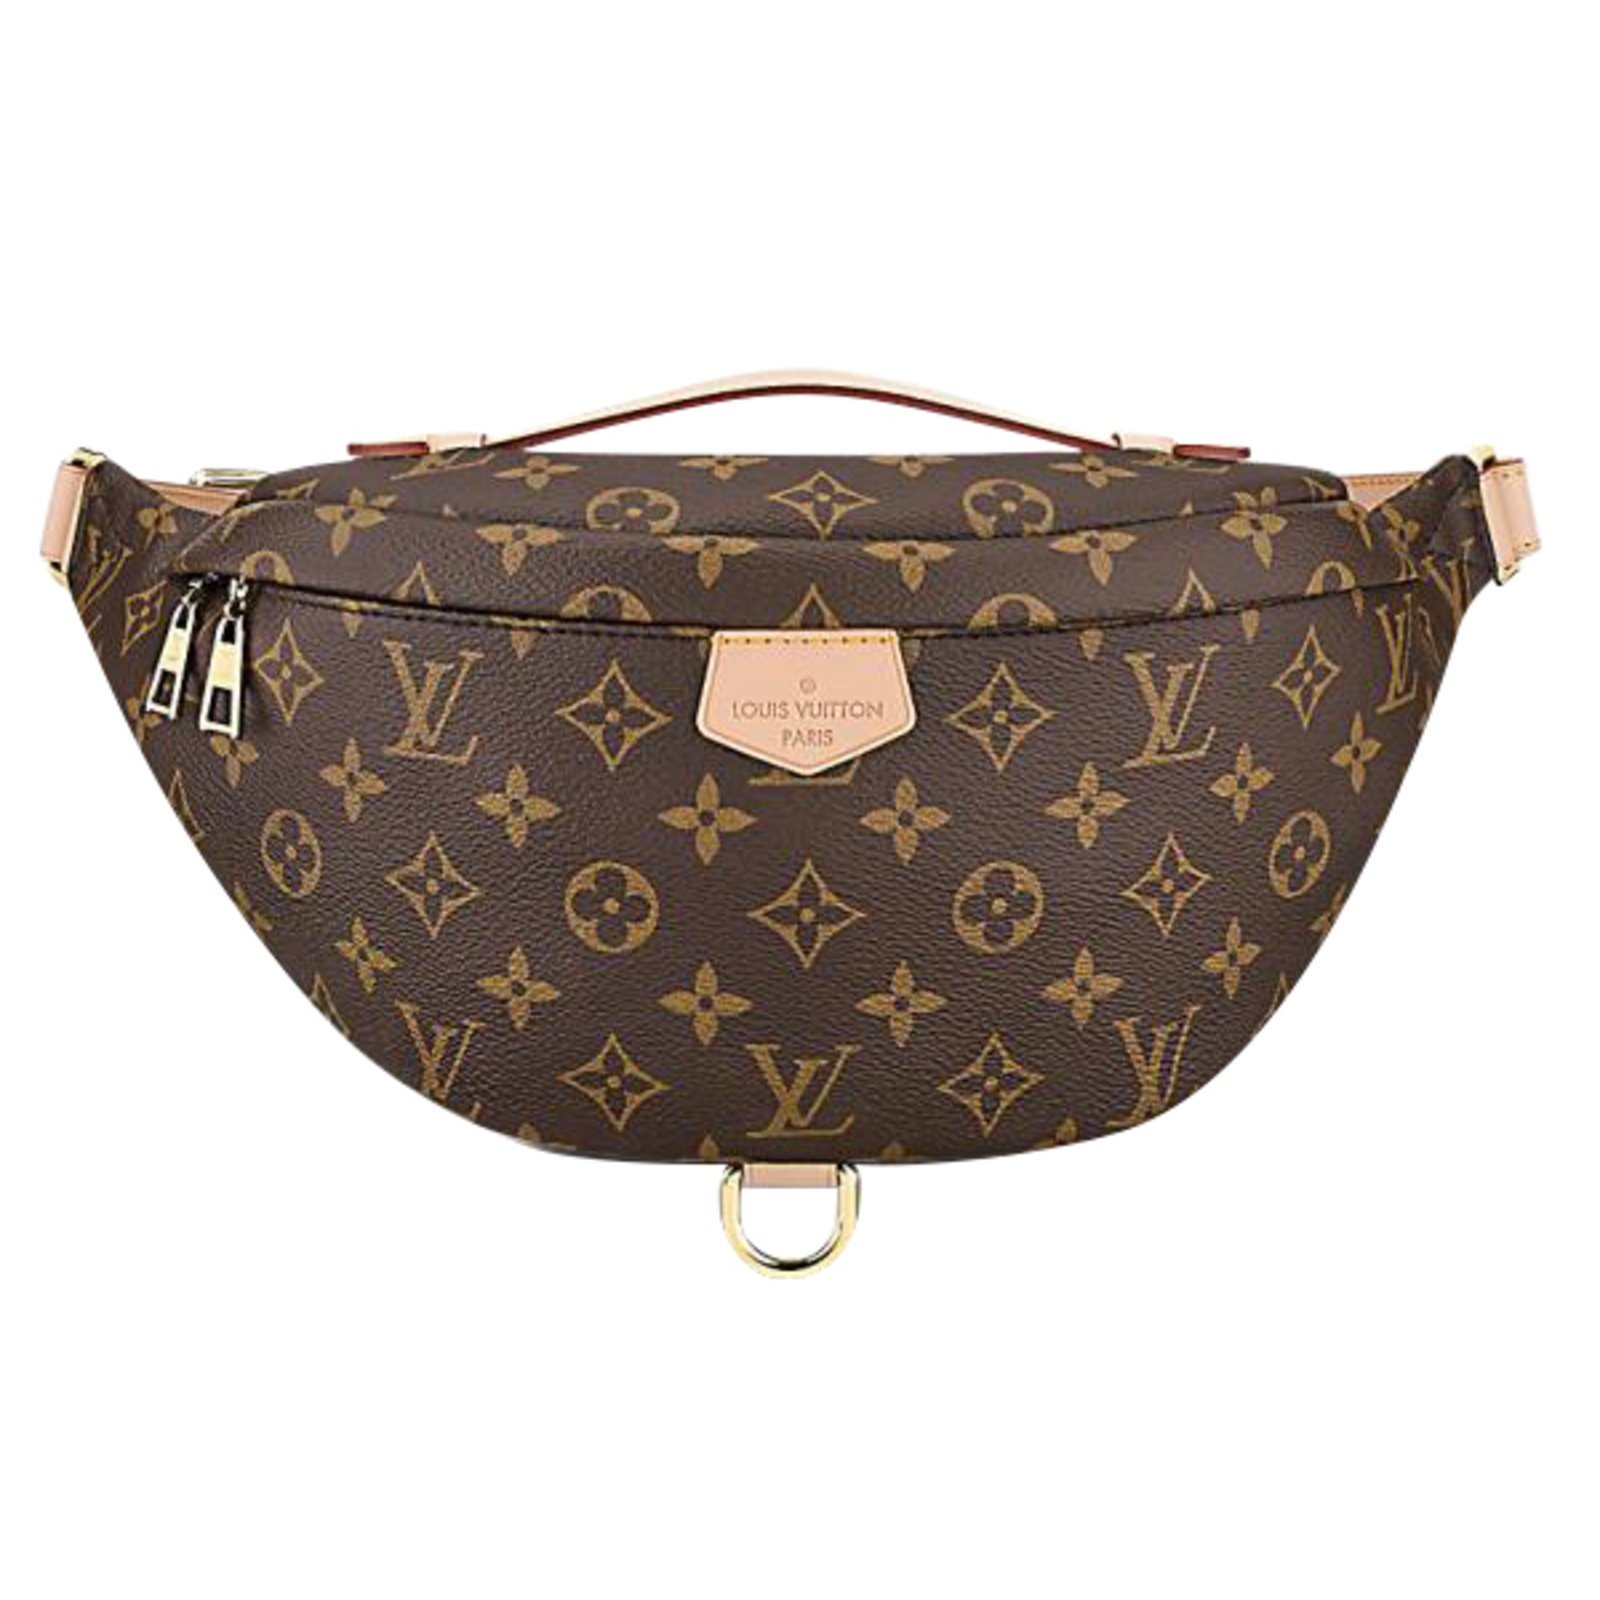 Bum bag / sac ceinture leather handbag Louis Vuitton Brown in Leather -  24238719